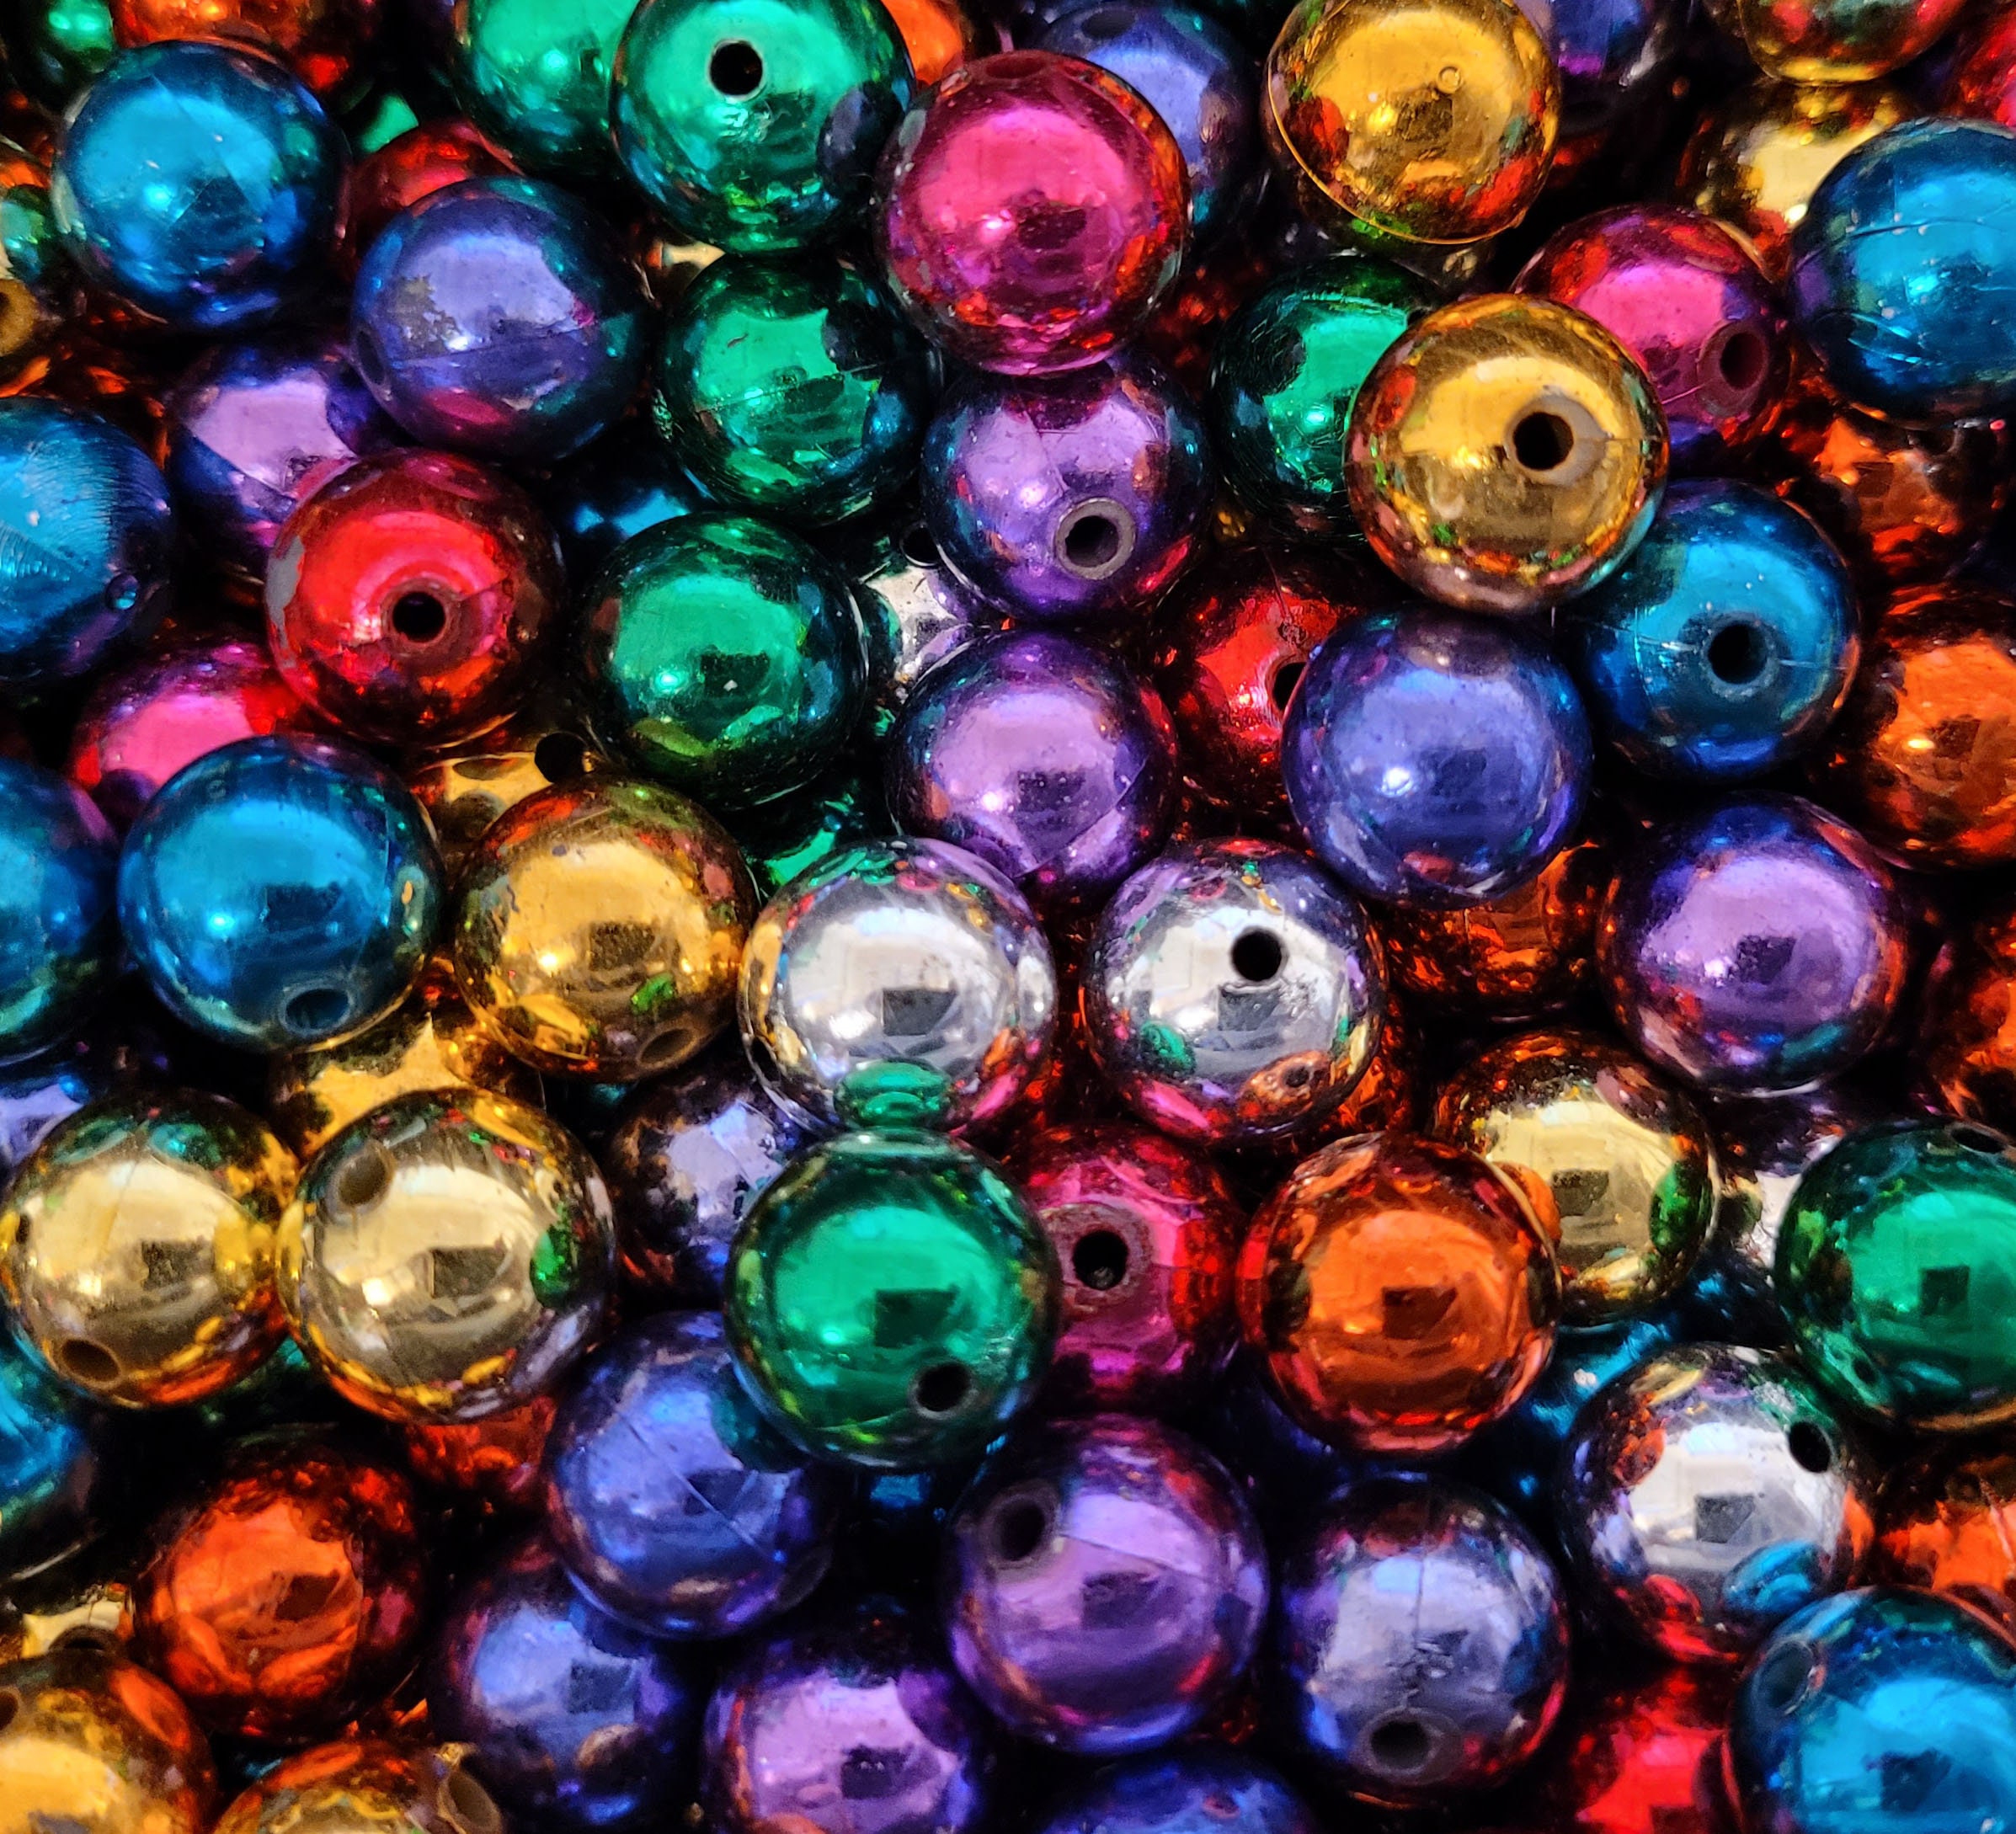 Vintage Plastic Sunburst Beads Lot of 2 Bags Multi Colored Floral Starburst  Sunburst Pinwheel Beads 18mm the Beadery NOS 